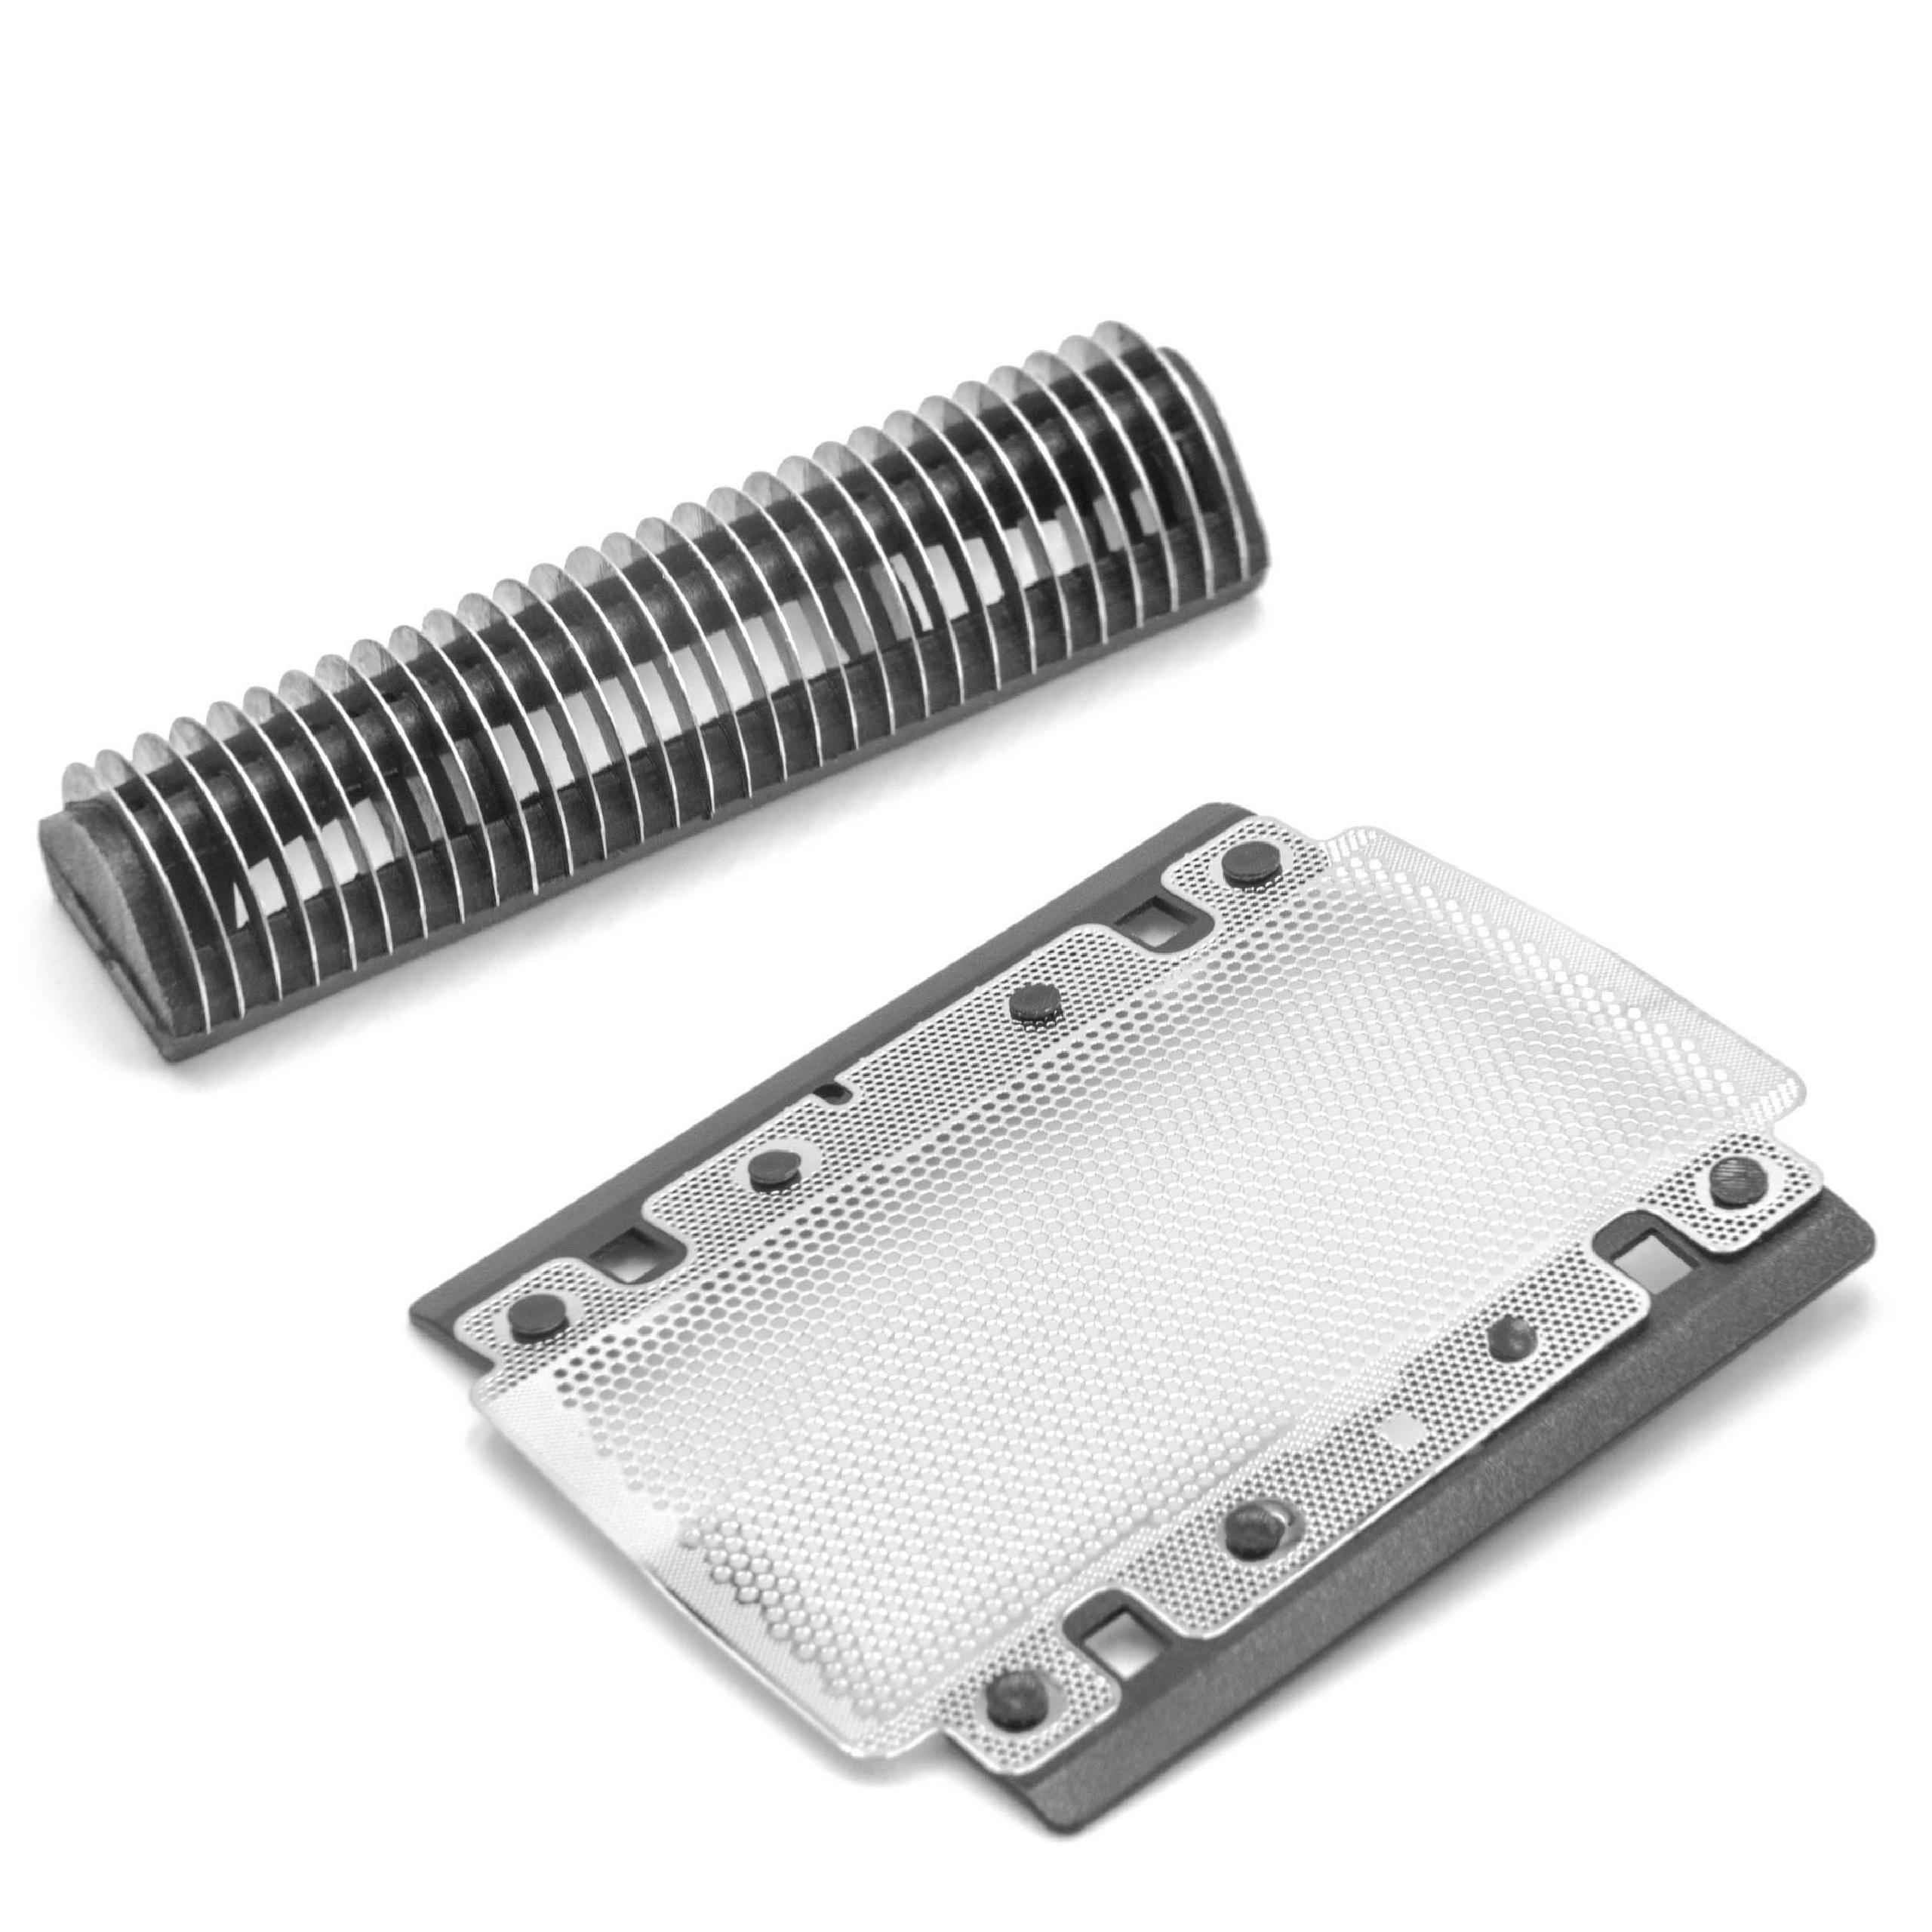 2x bloc de lames / grille de rasoir pour Braun 3600 - acier inoxydable / nickel